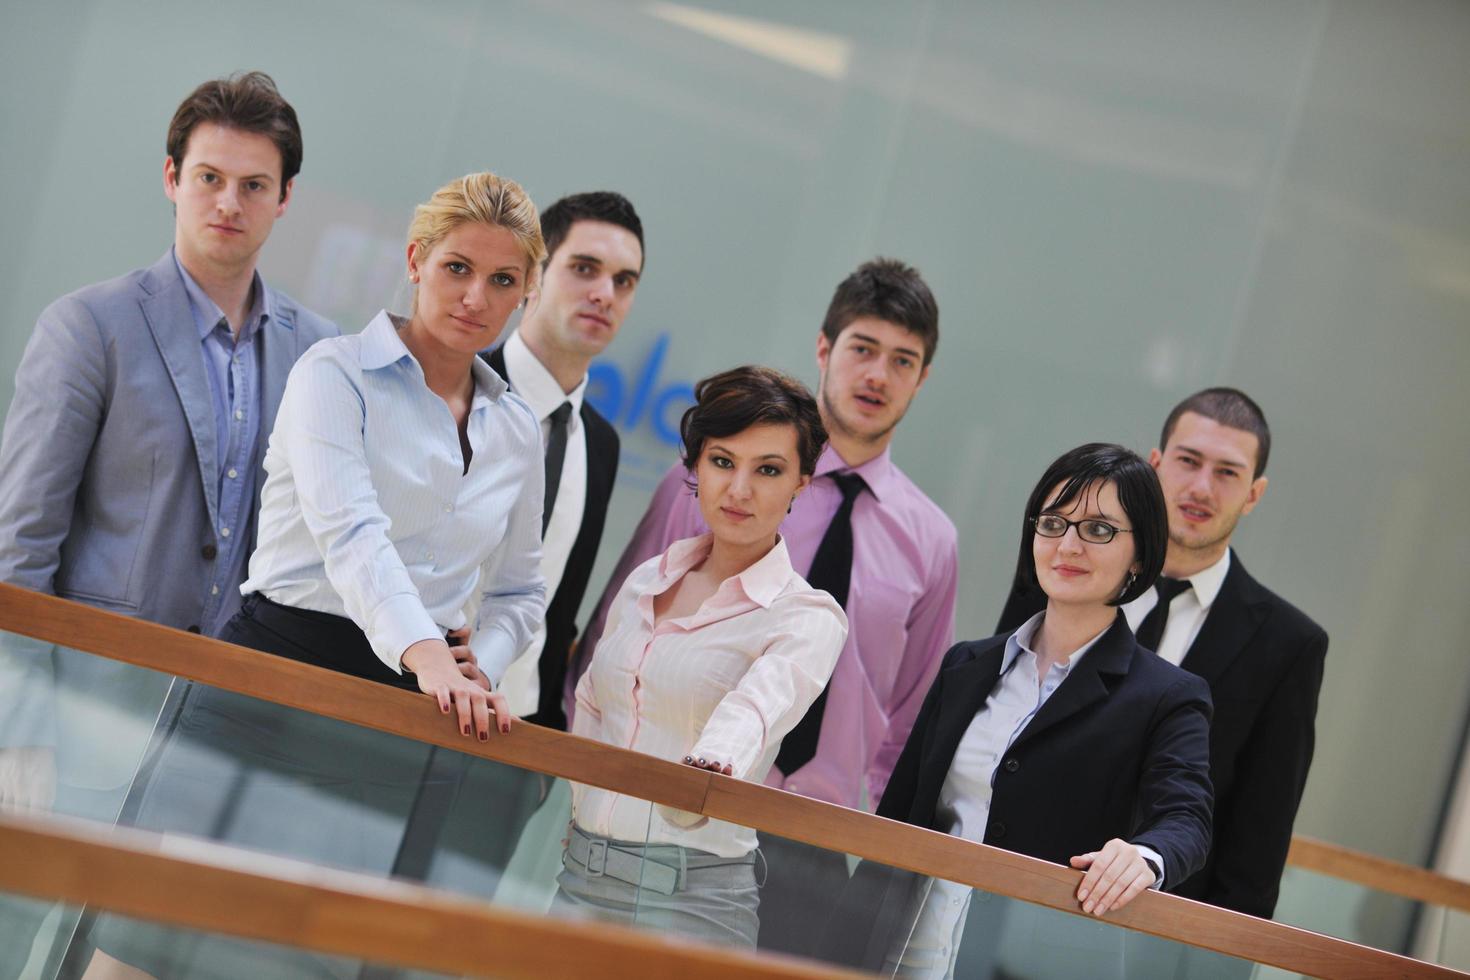 business people team photo